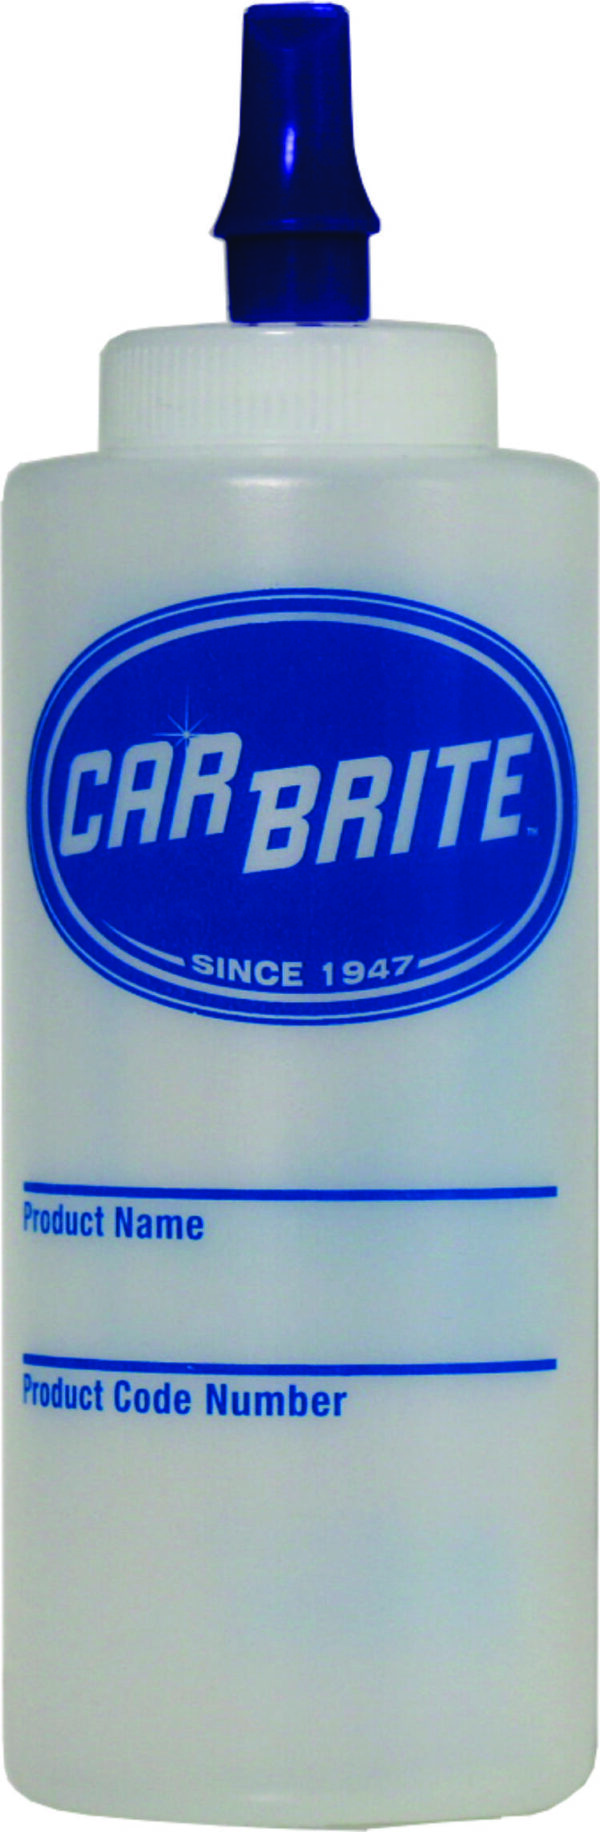 Car Brite™ Polish Applicator Bottle 12 oz.